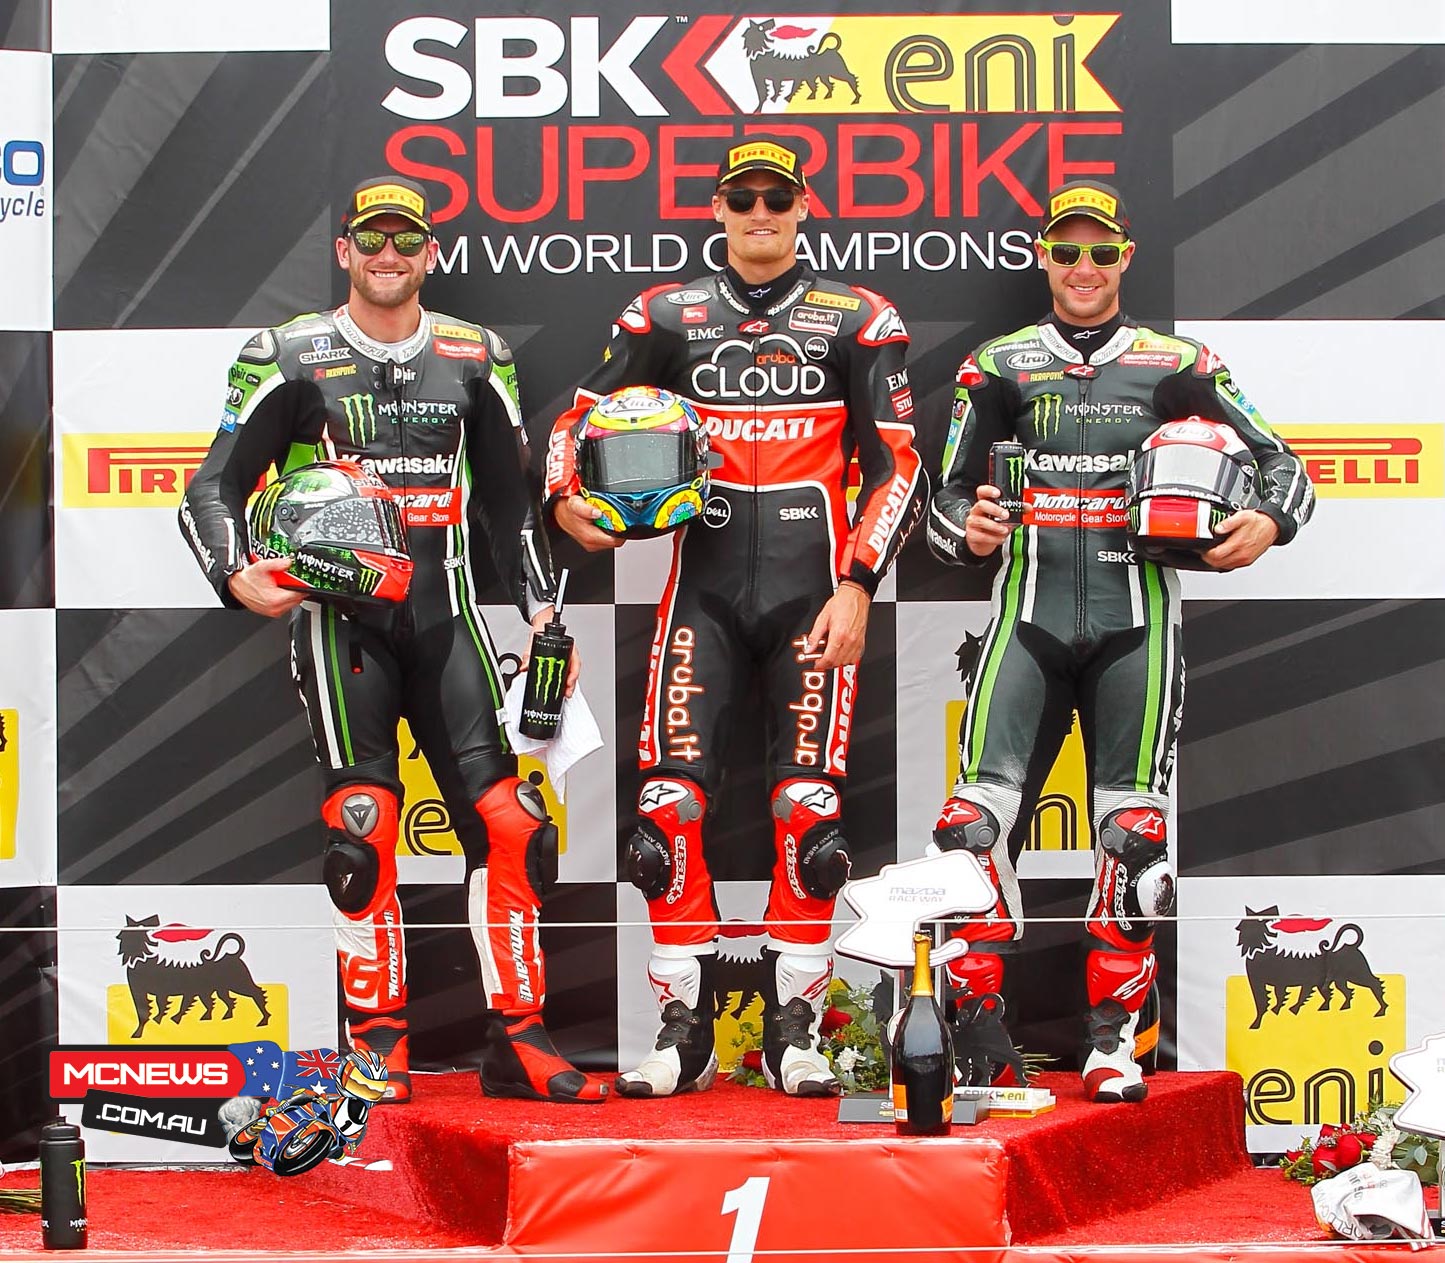 World SBK 2015 - Laguna Seca - Superbike Podium - 2. Tom Sykes (GBR) 1 - Chaz Davies (GBR) 3 - Jonathan Rea (GBR)